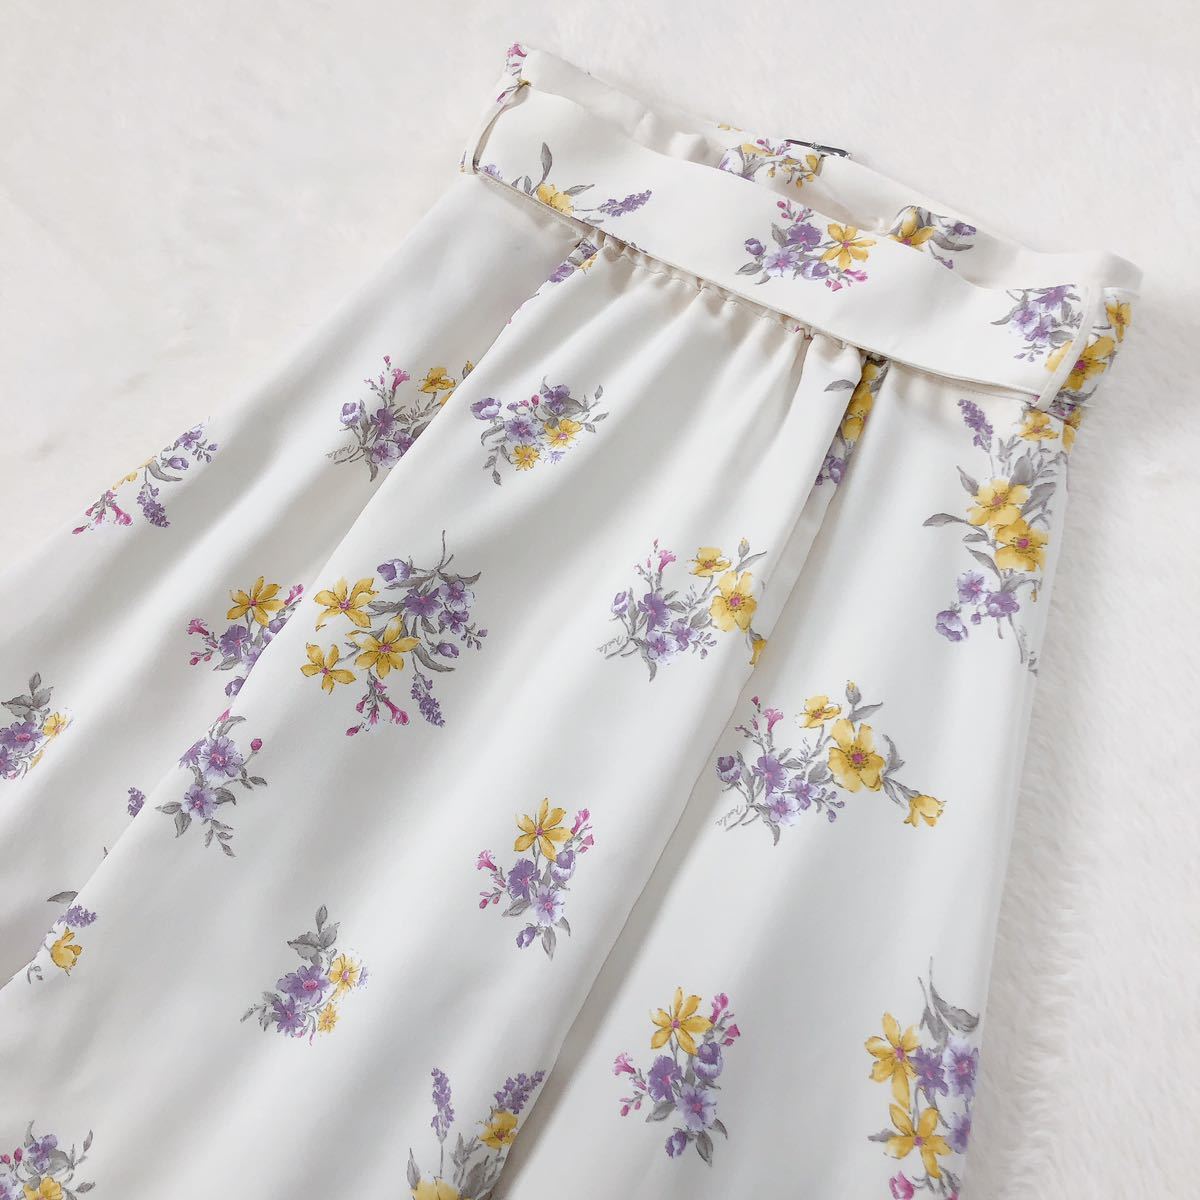 Noela ノエラ 花柄 スカート フレア ベルト付き オフホワイト パープル イエロー 日本製 M _画像5